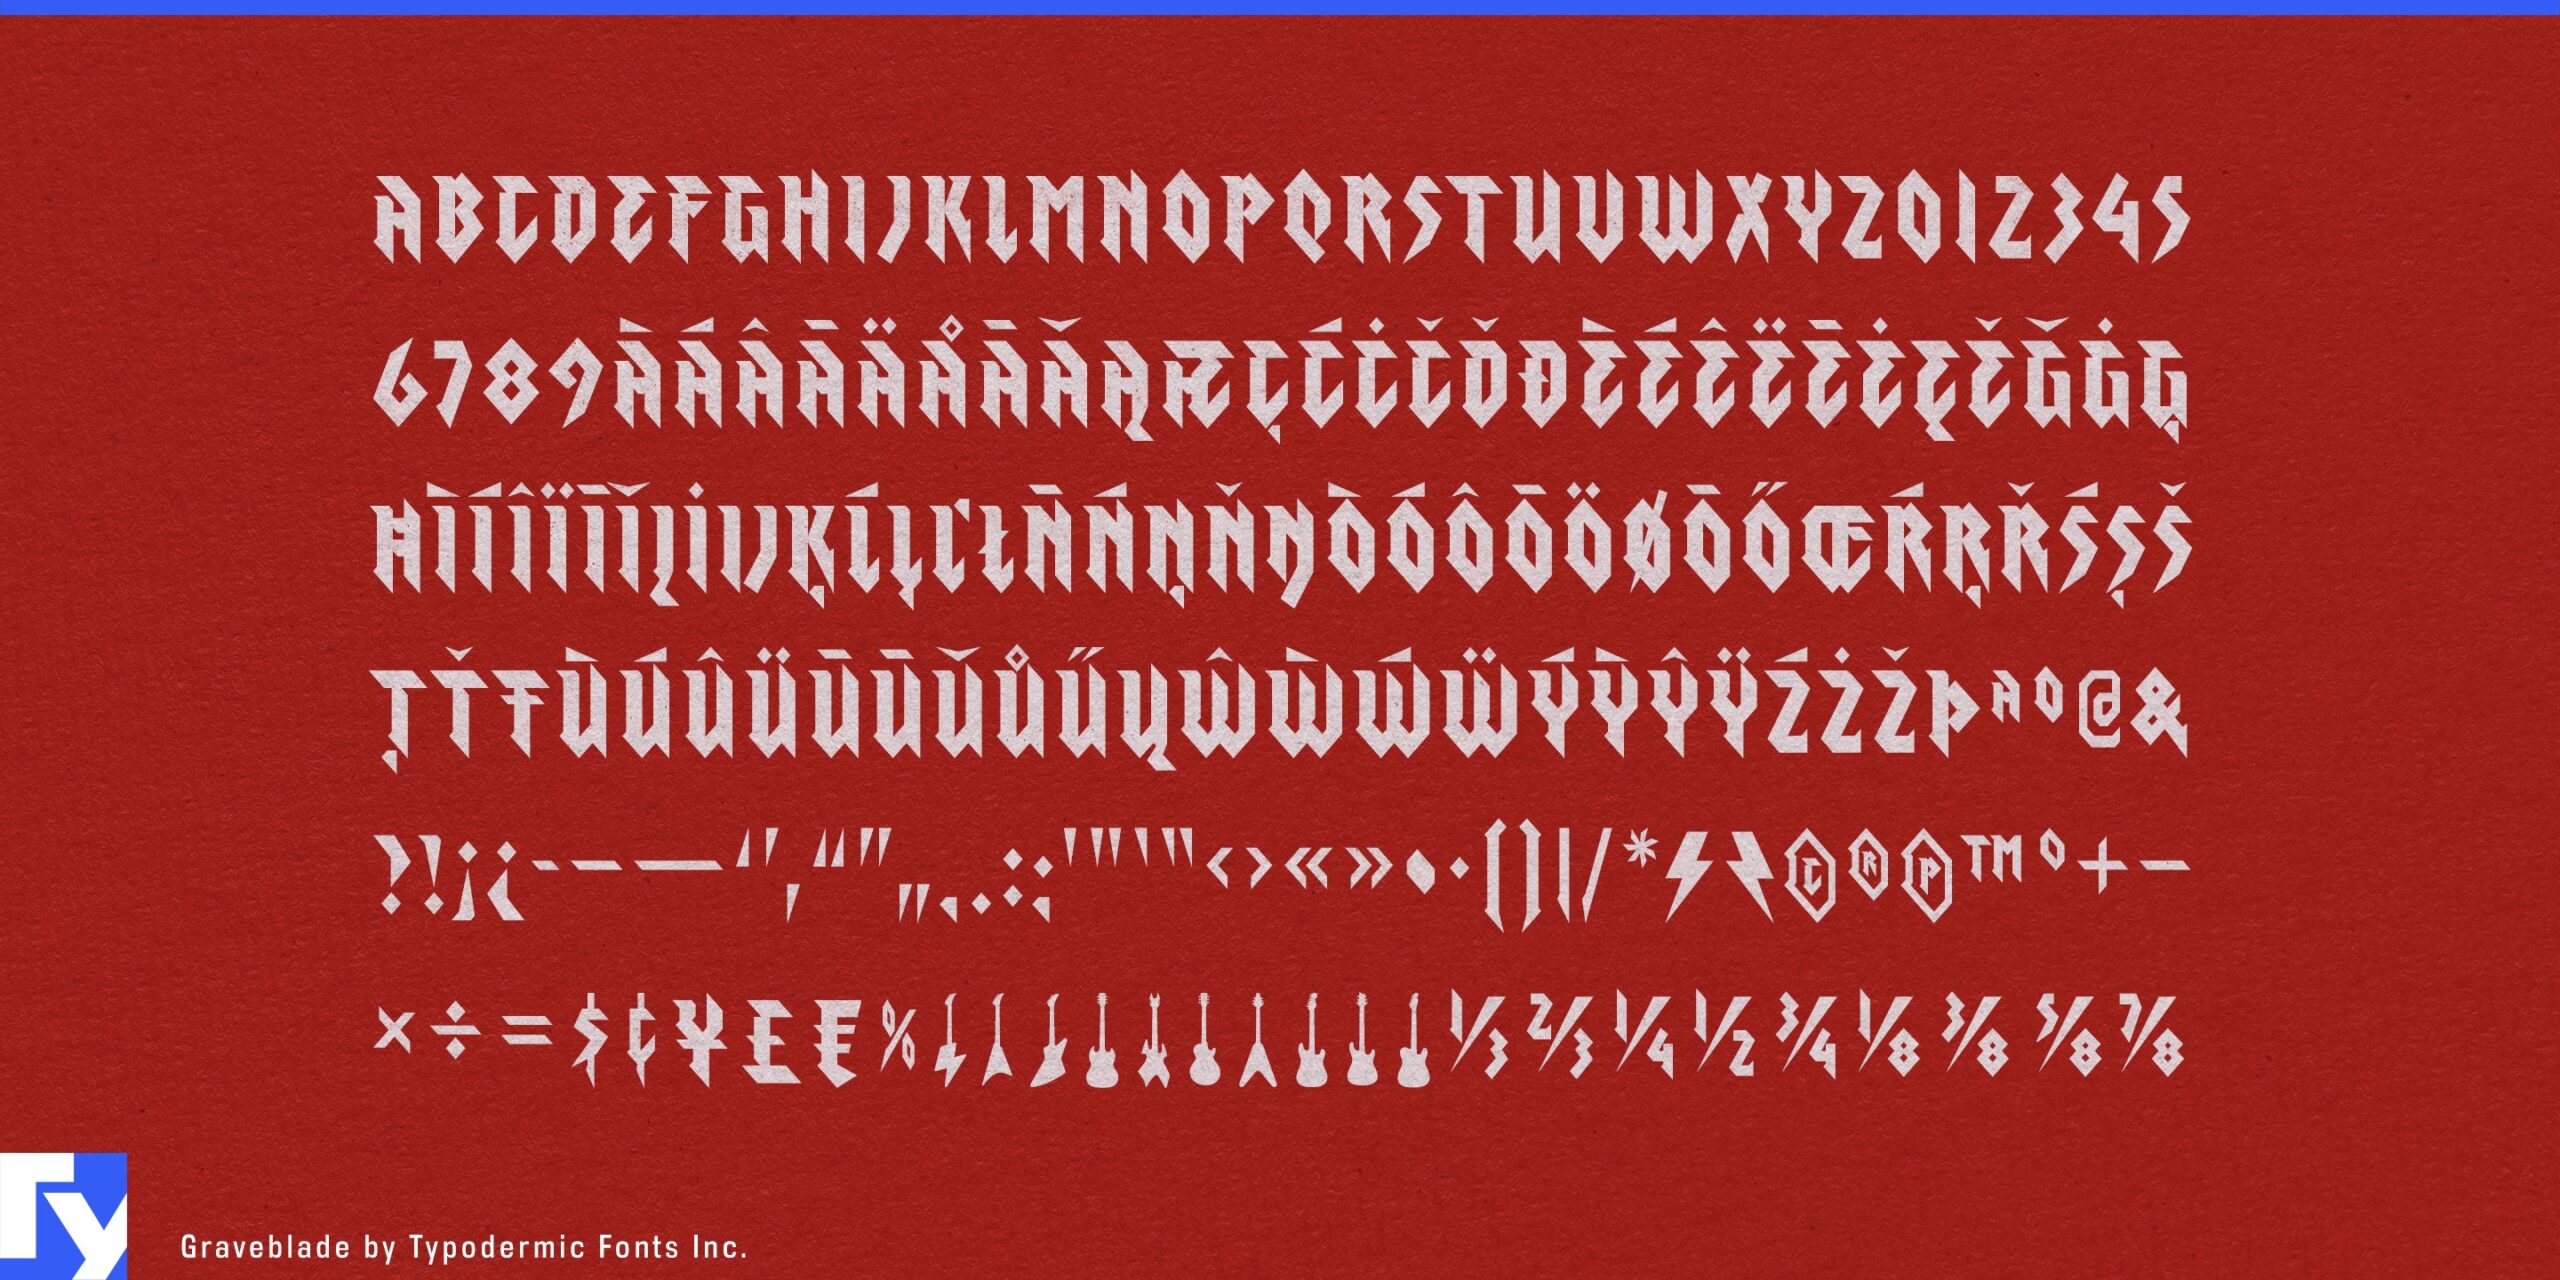 Sharp as a Knife: Graveblade Typeface Cuts Through the Noise